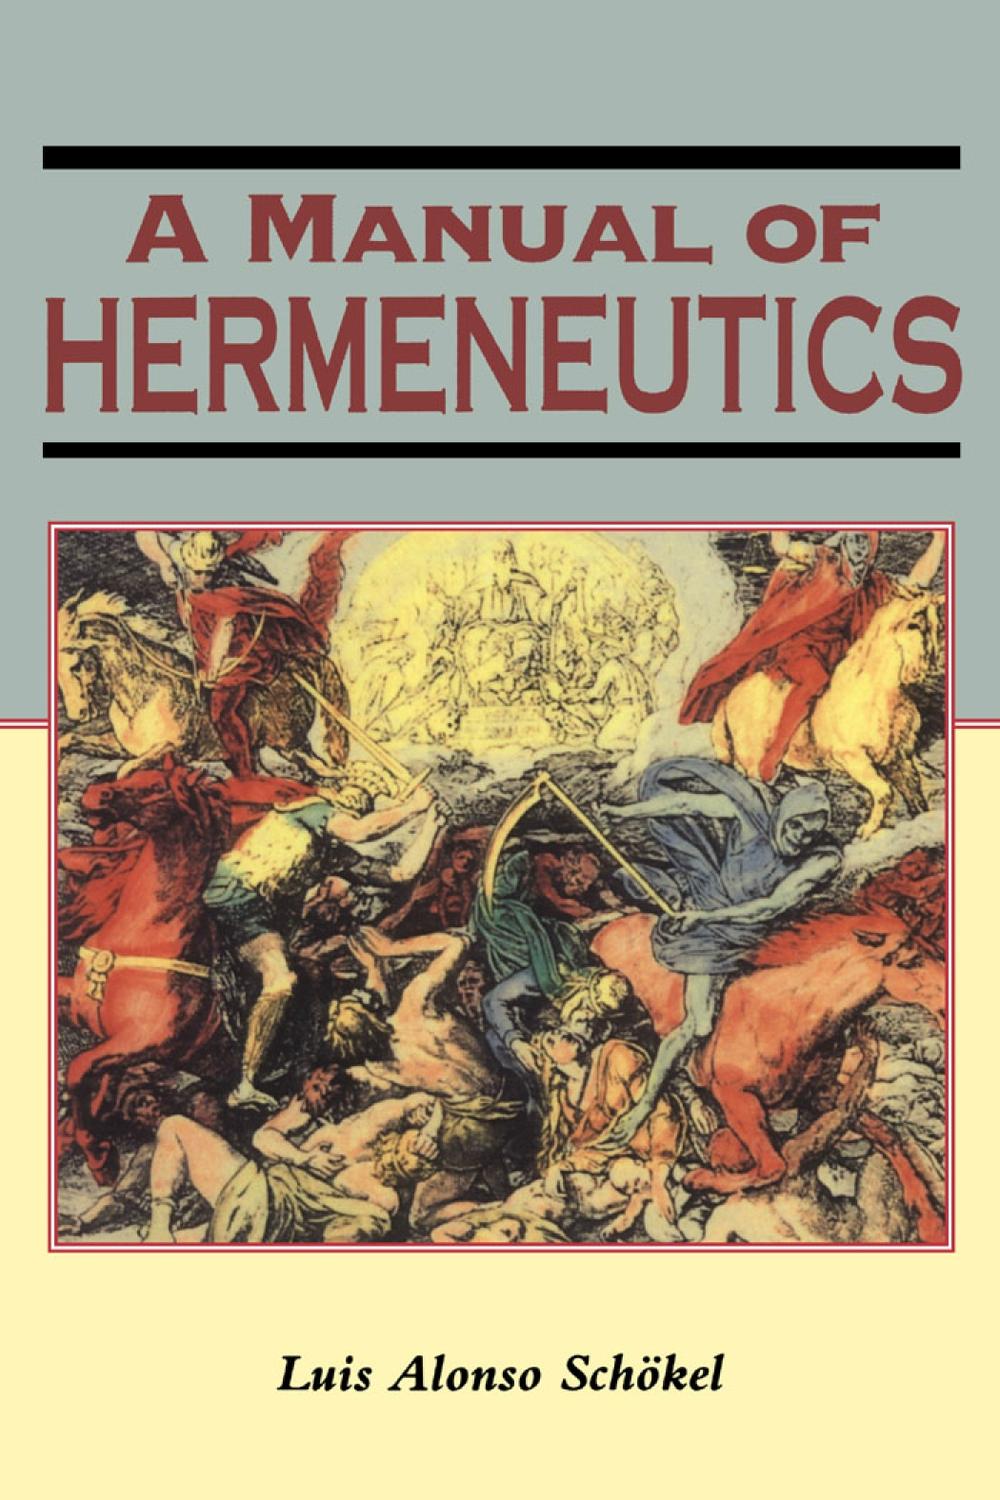 A Manual of Hermeneutics - Luis Alonso Schökel